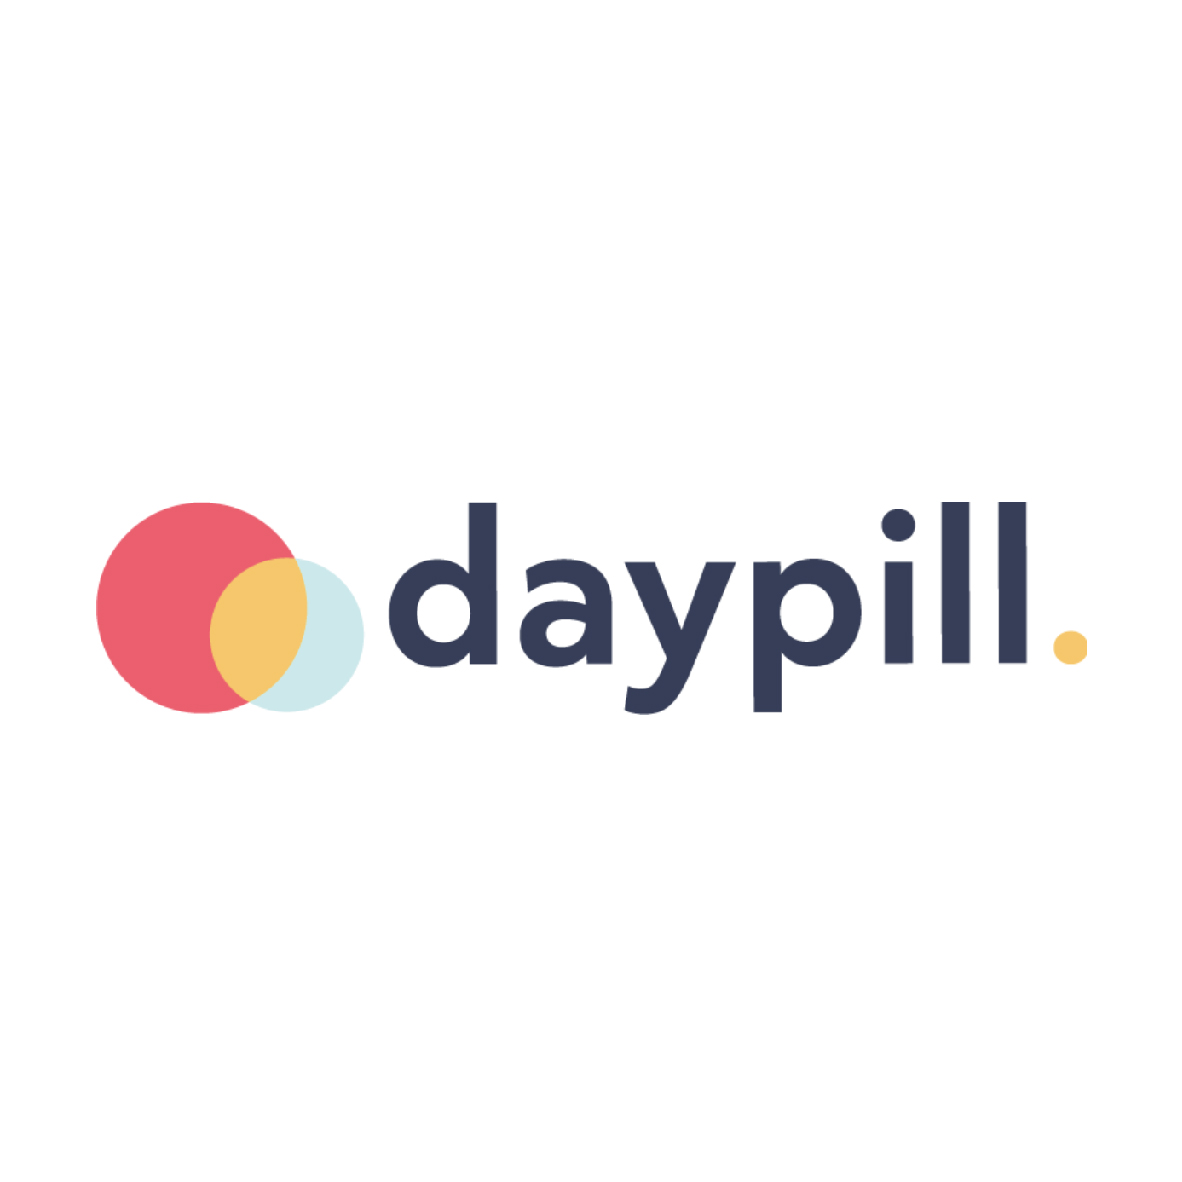 daypill